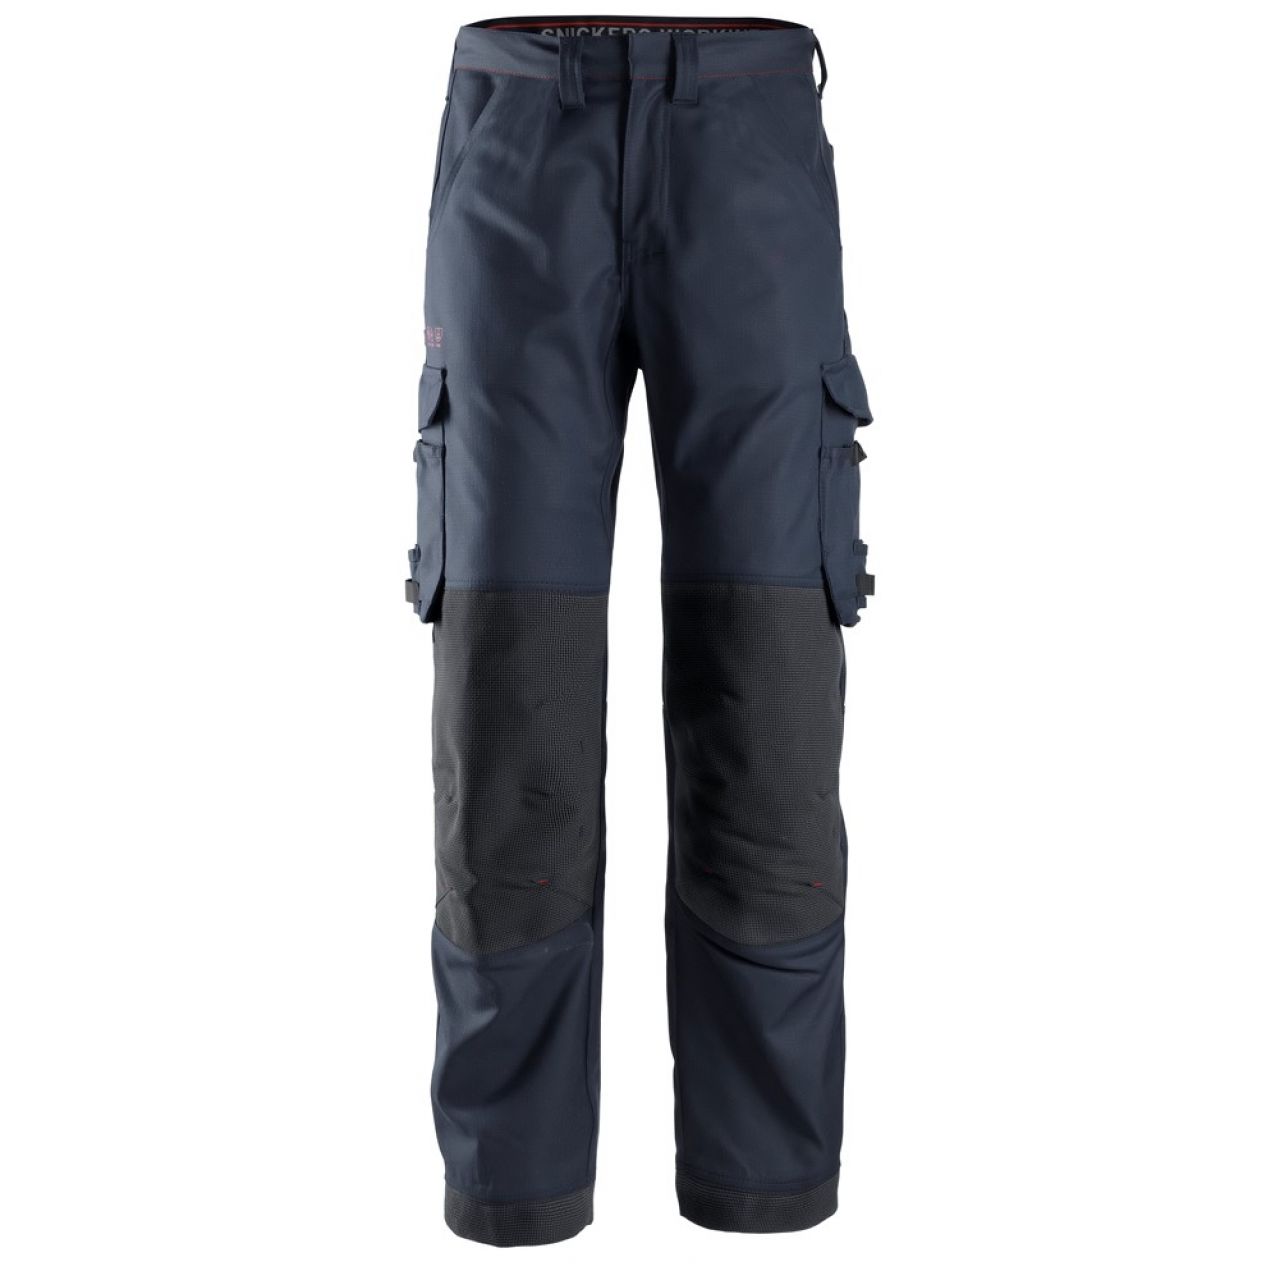 6362 Pantalones largos de trabajo con bolsillos simétricos ProtecWork azul marino talla 50